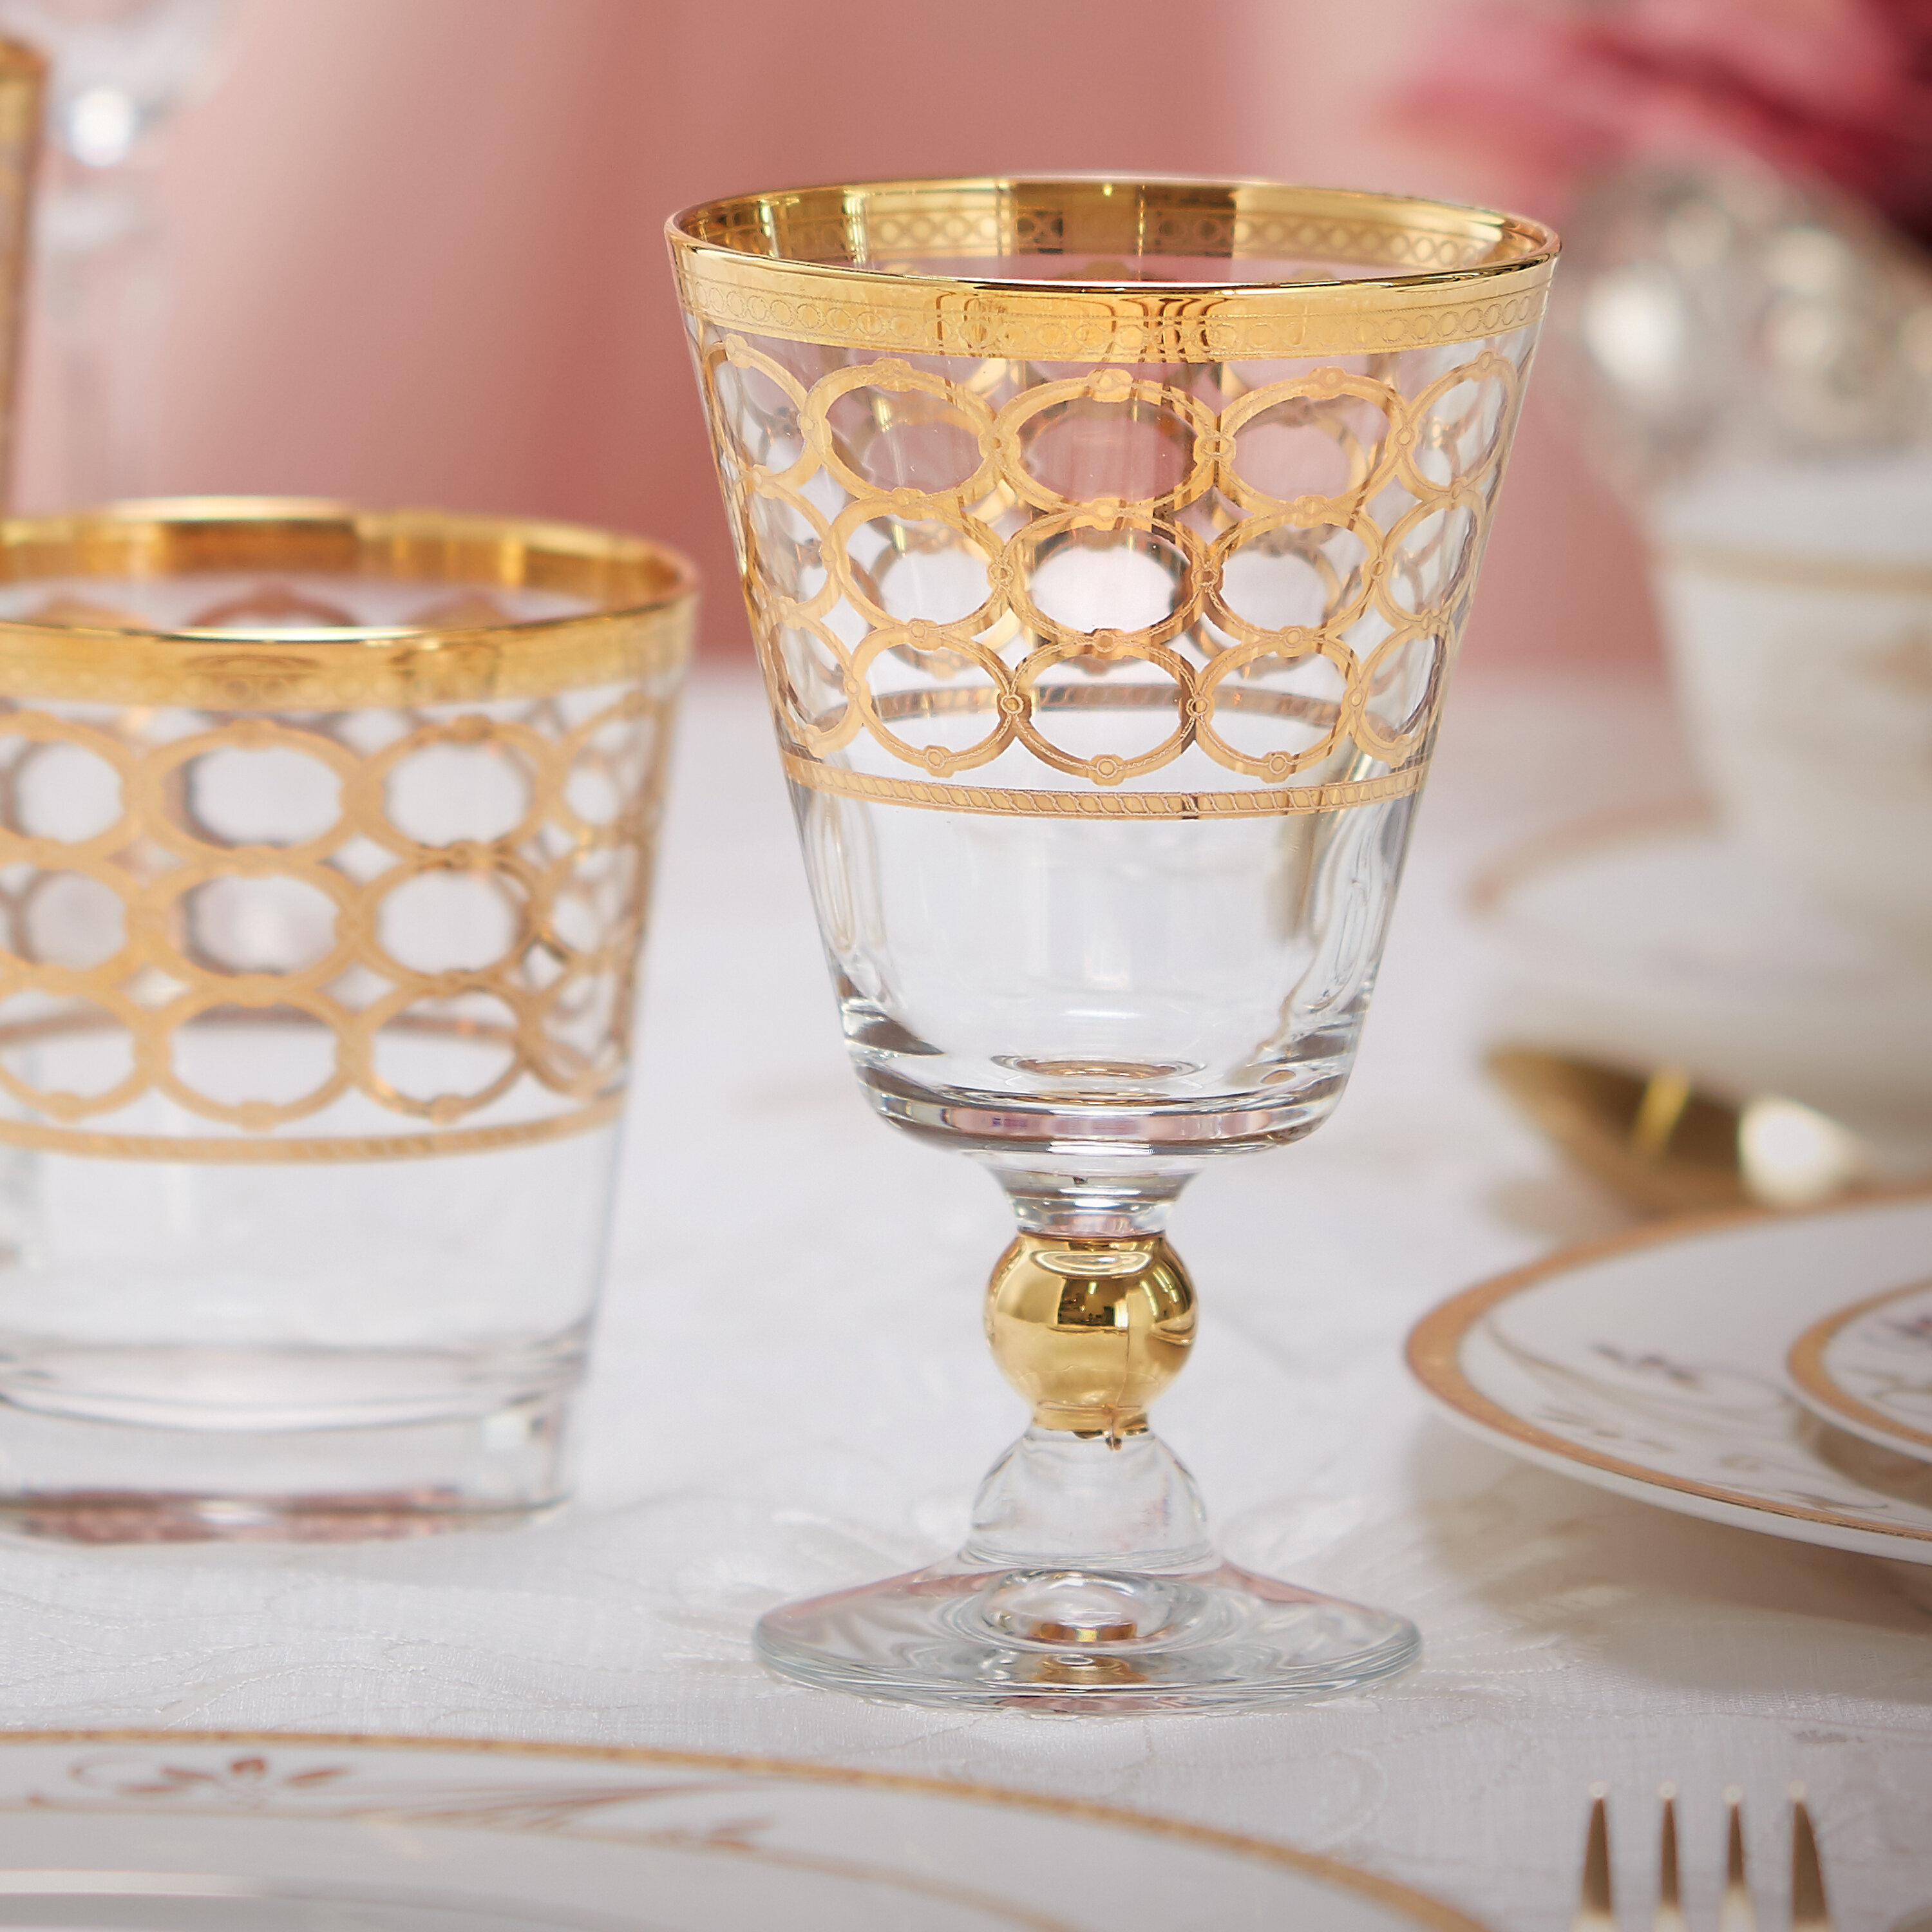 Embellished 24K Gold Crystal Red Wine Goblets Made in Italy (Set of 4)